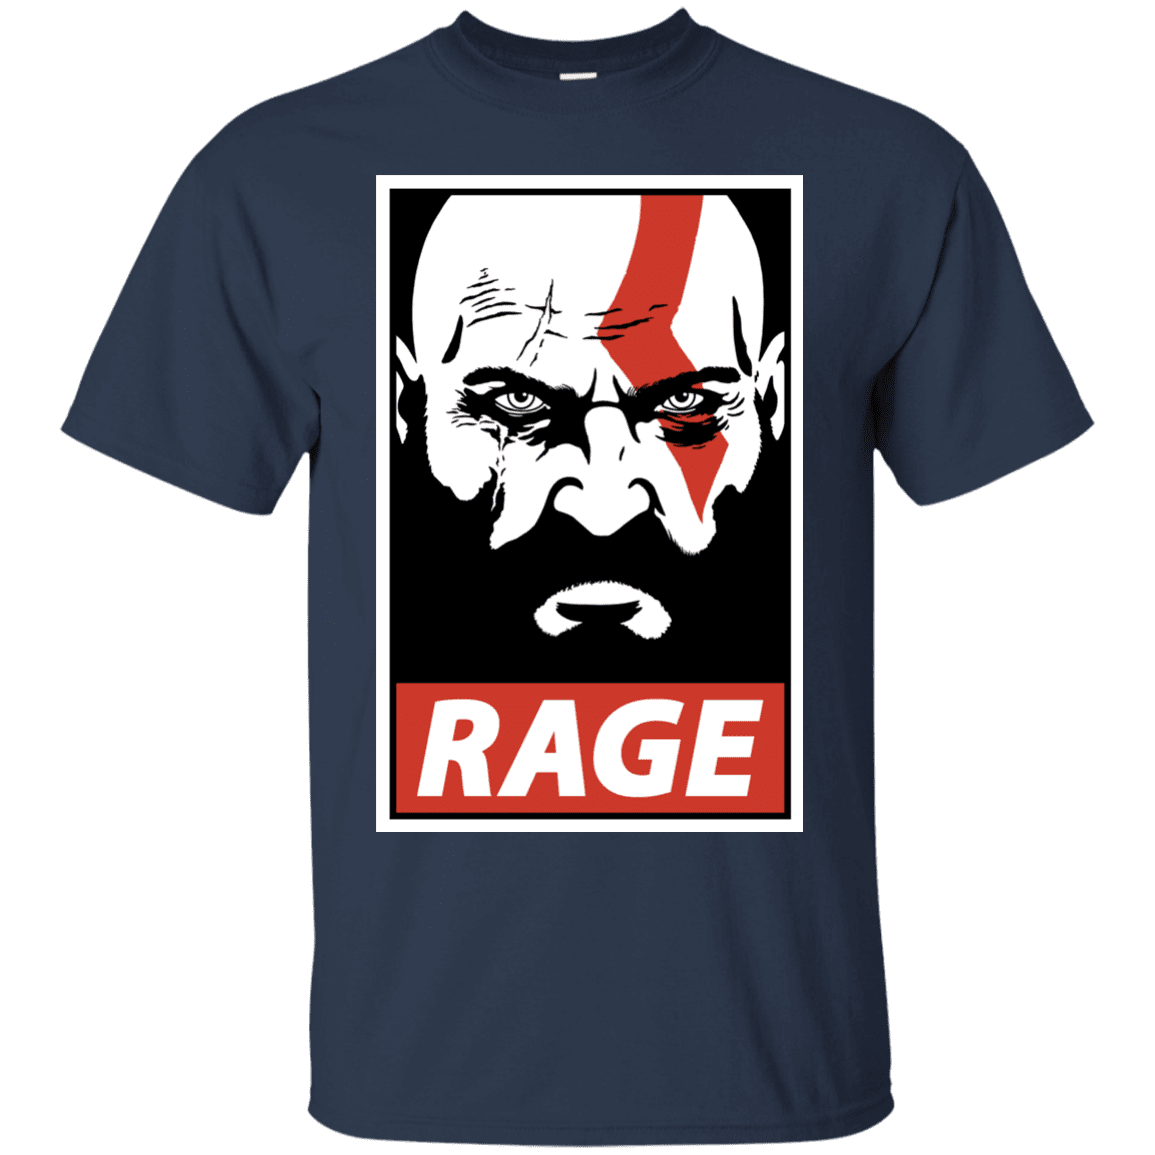 T-Shirts Navy / S Spartan Rage T-Shirt